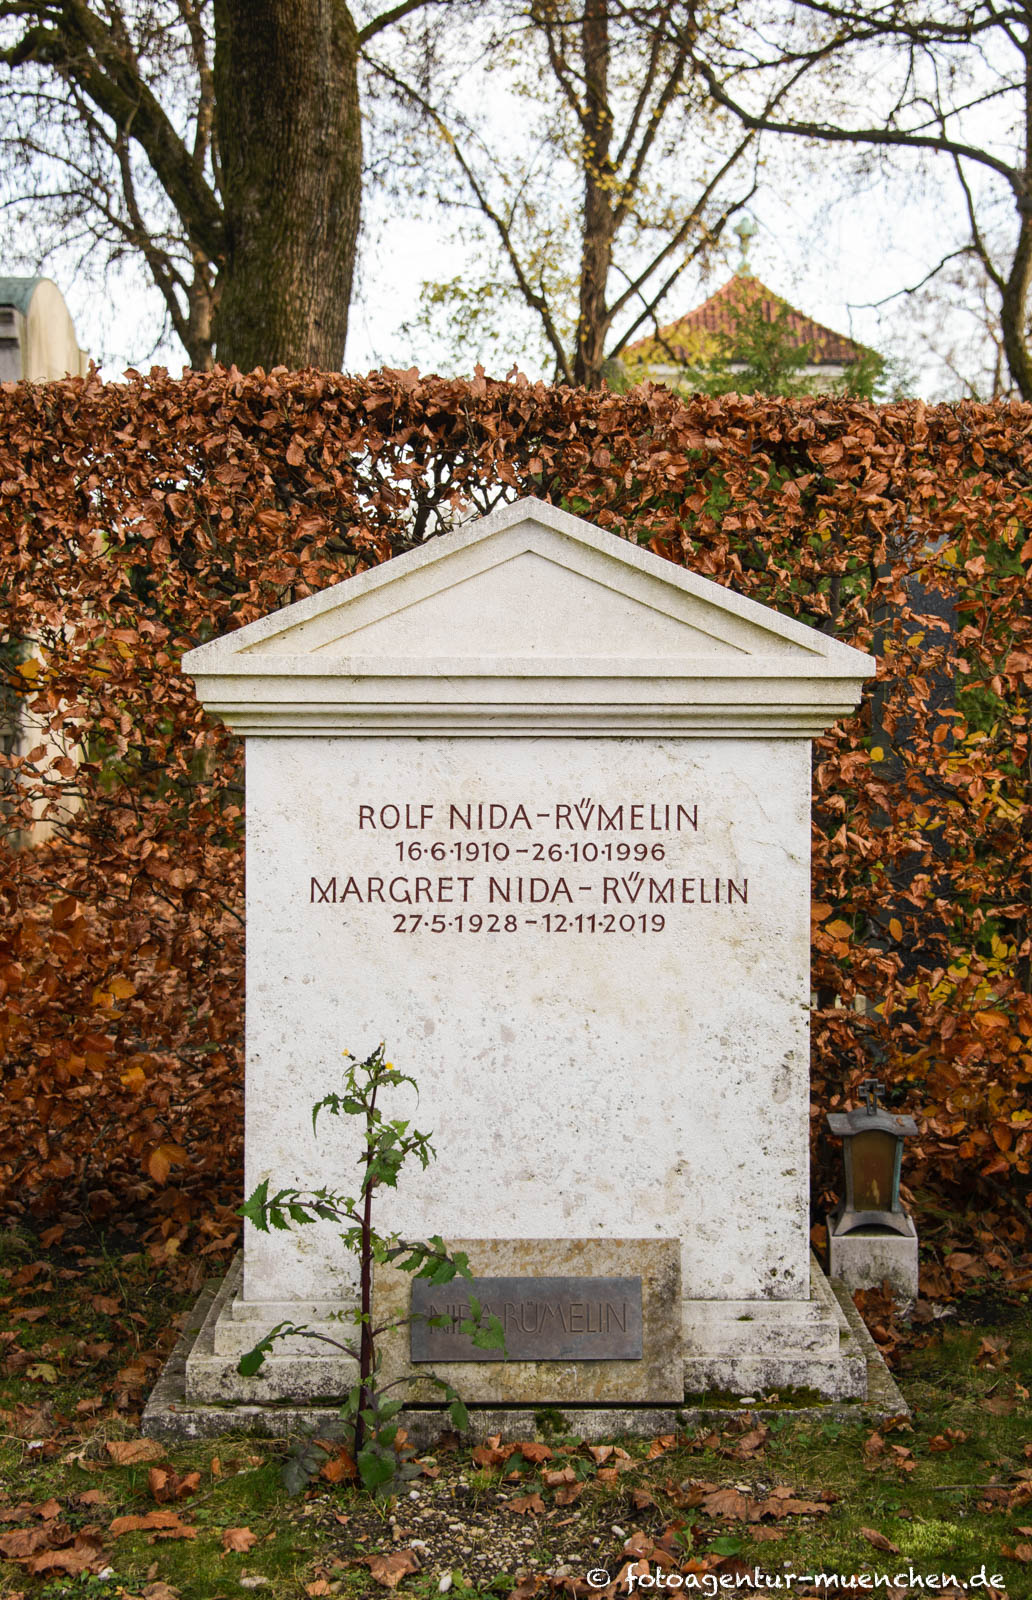 Rolf Nida-Rümelin